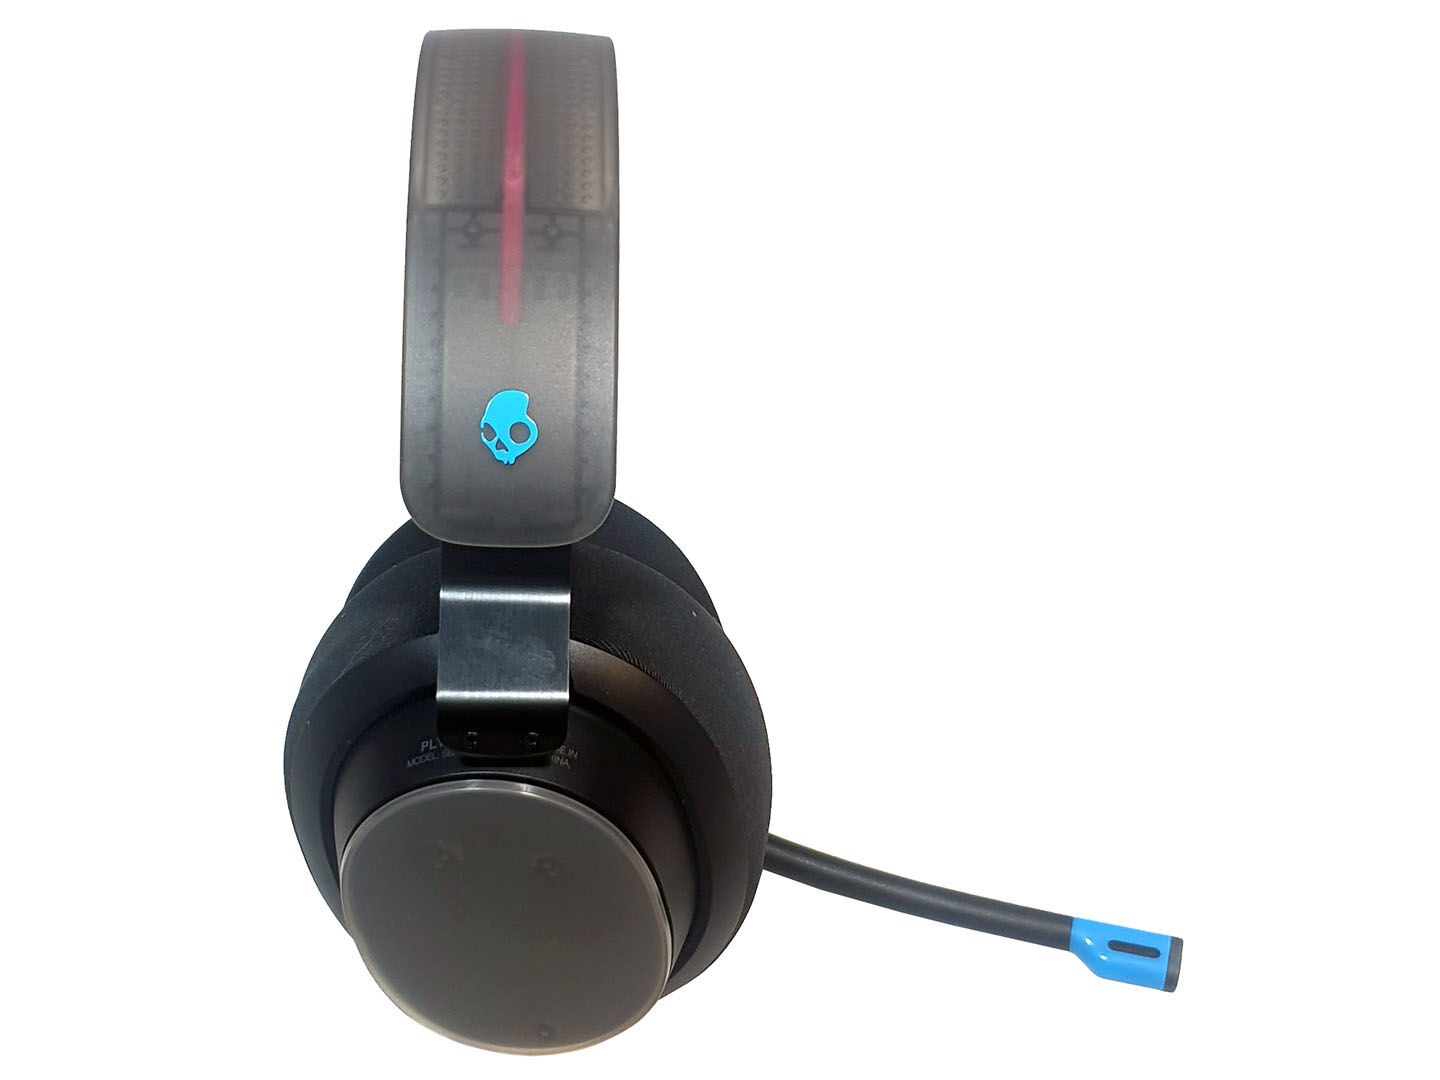 Grab the New PLYR Multi-Platform Wireless Gaming Headset